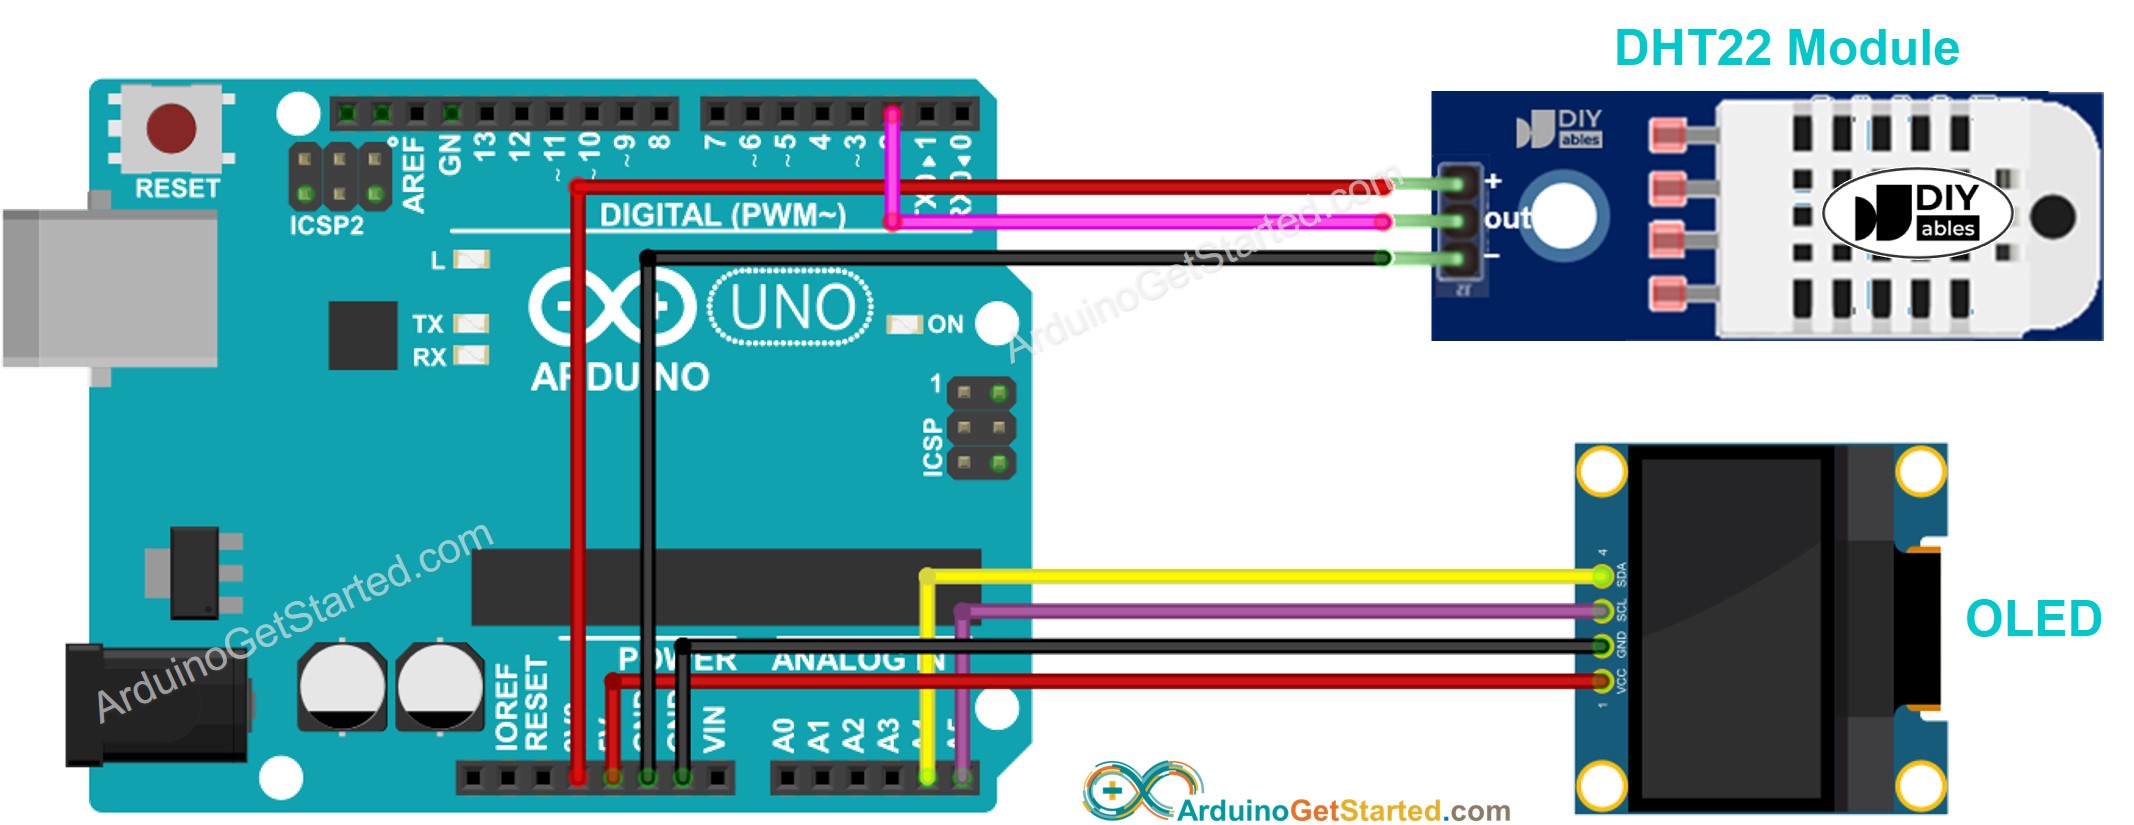 Arduino DHT22 module OLED Wiring Diagram